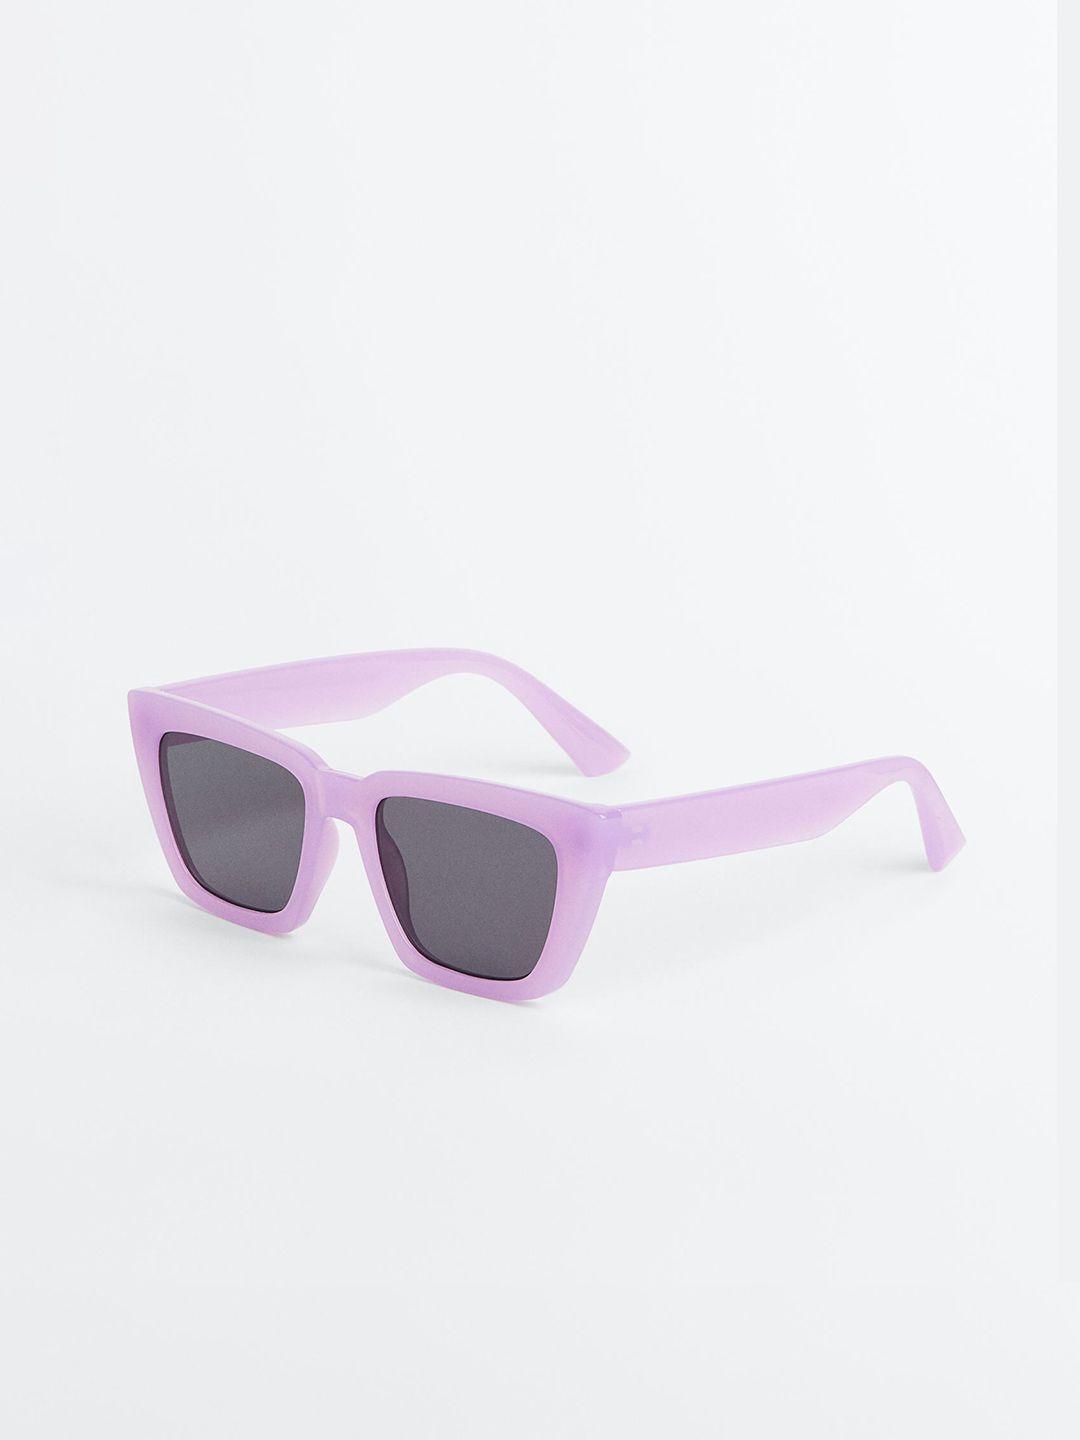 h&m-women-sunglasses